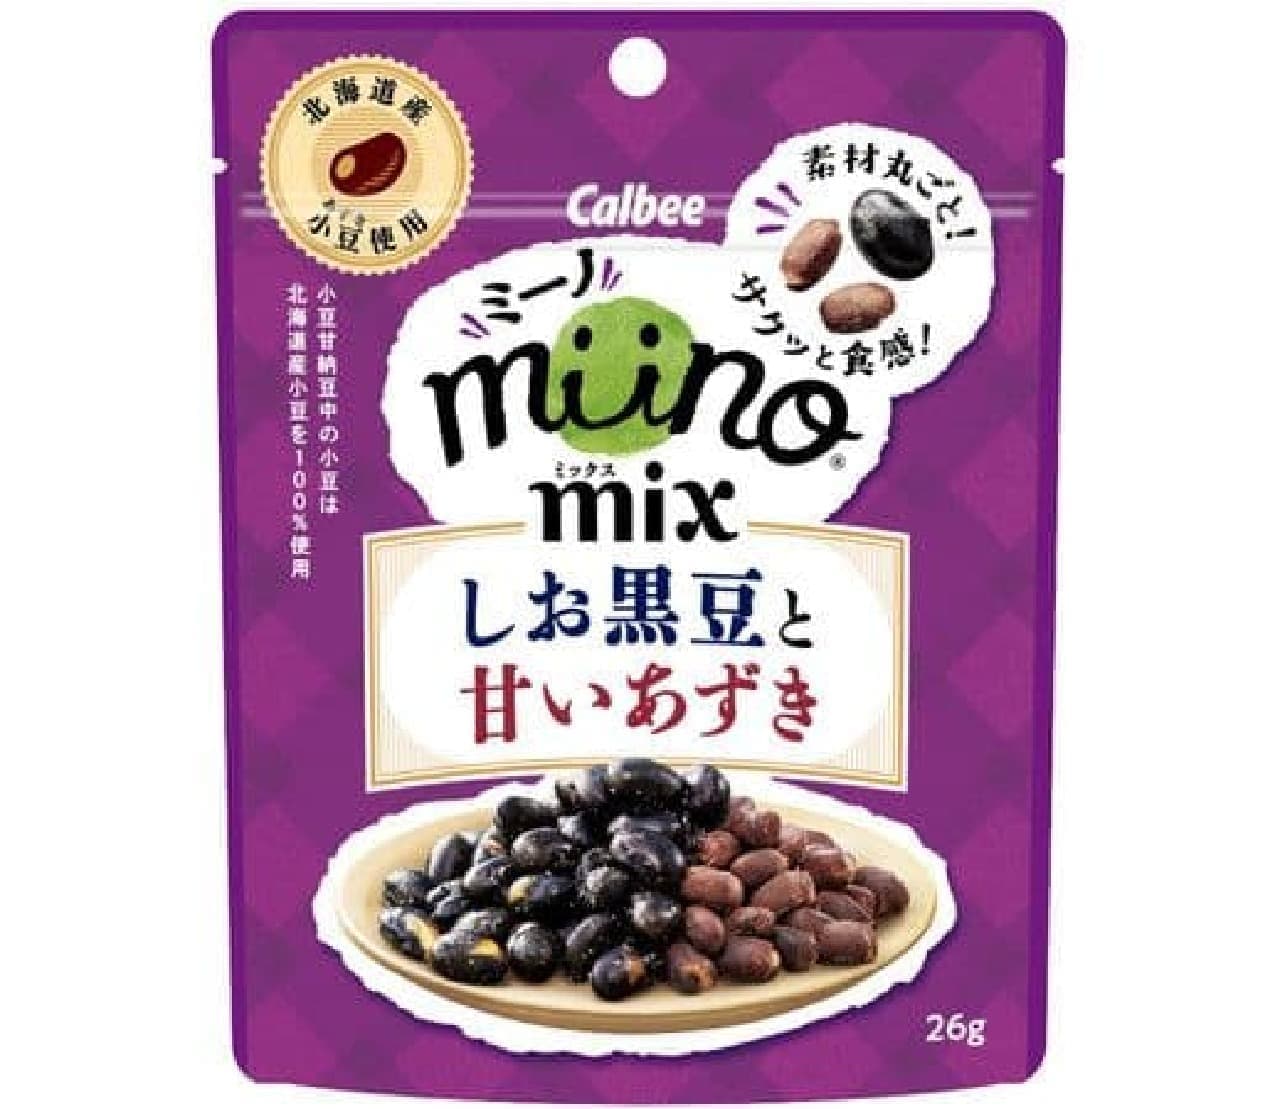 Calbee "miino mix Shio black beans and sweet azuki beans"